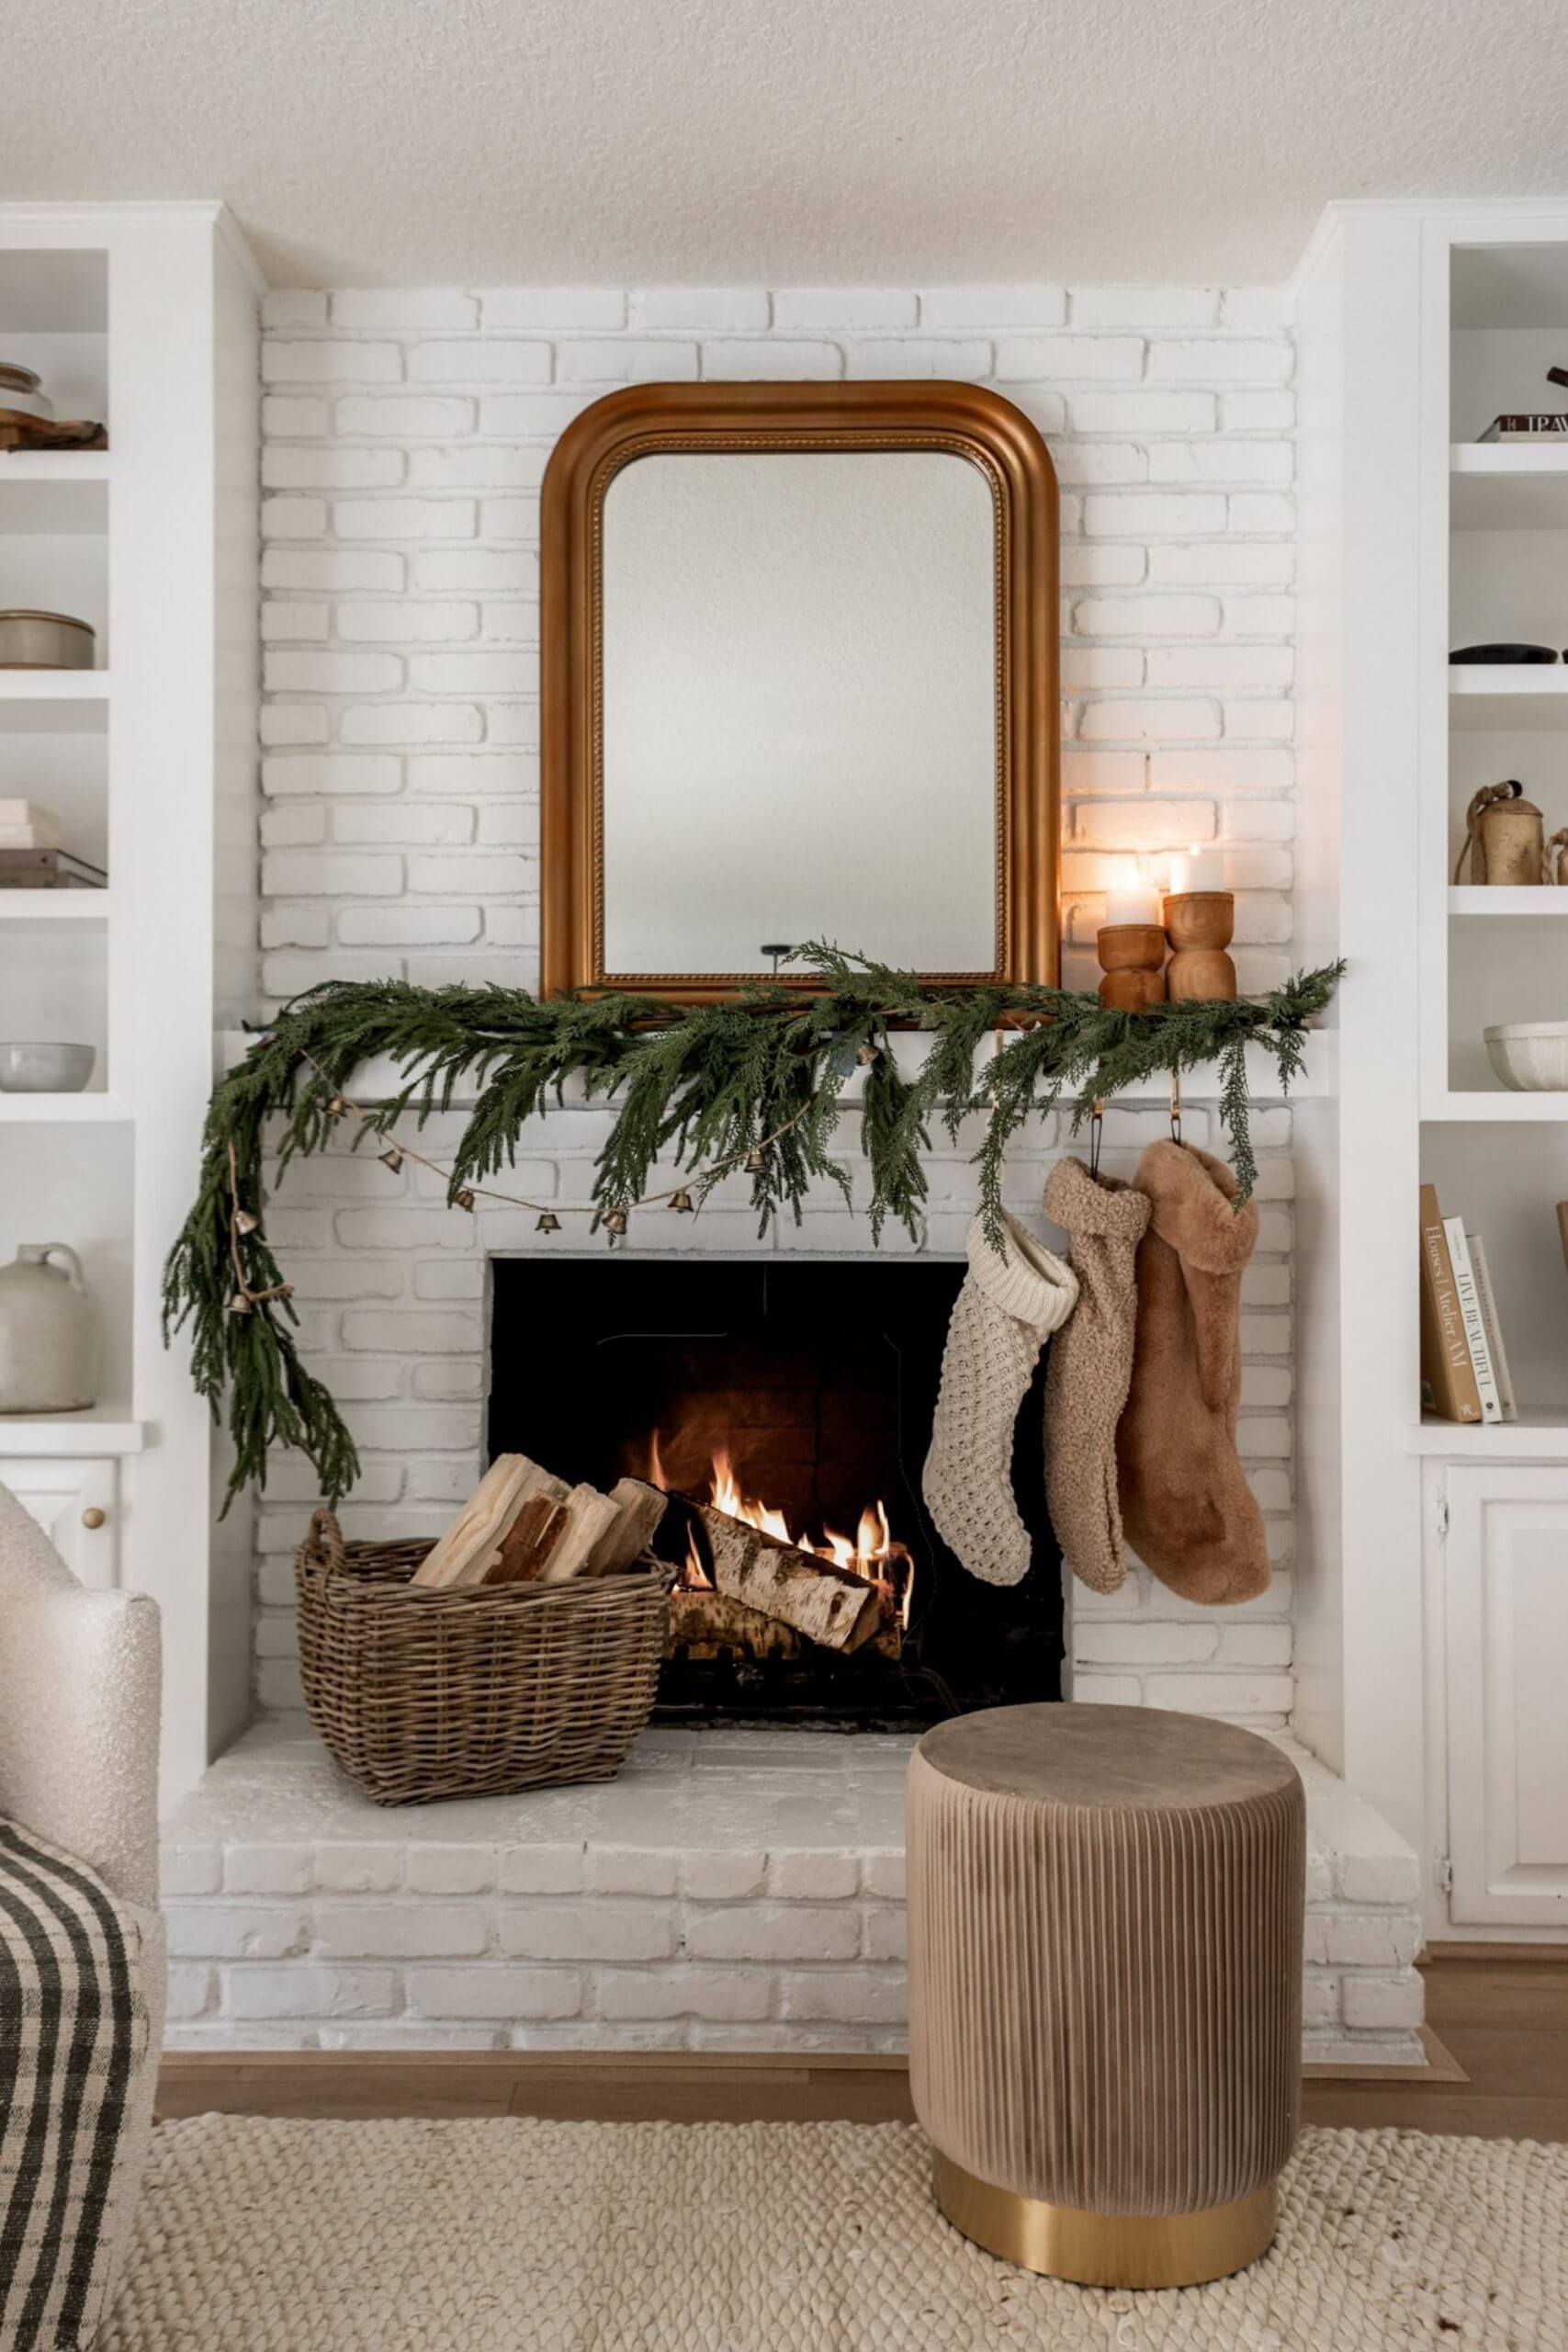 Fireplace Christmas decor